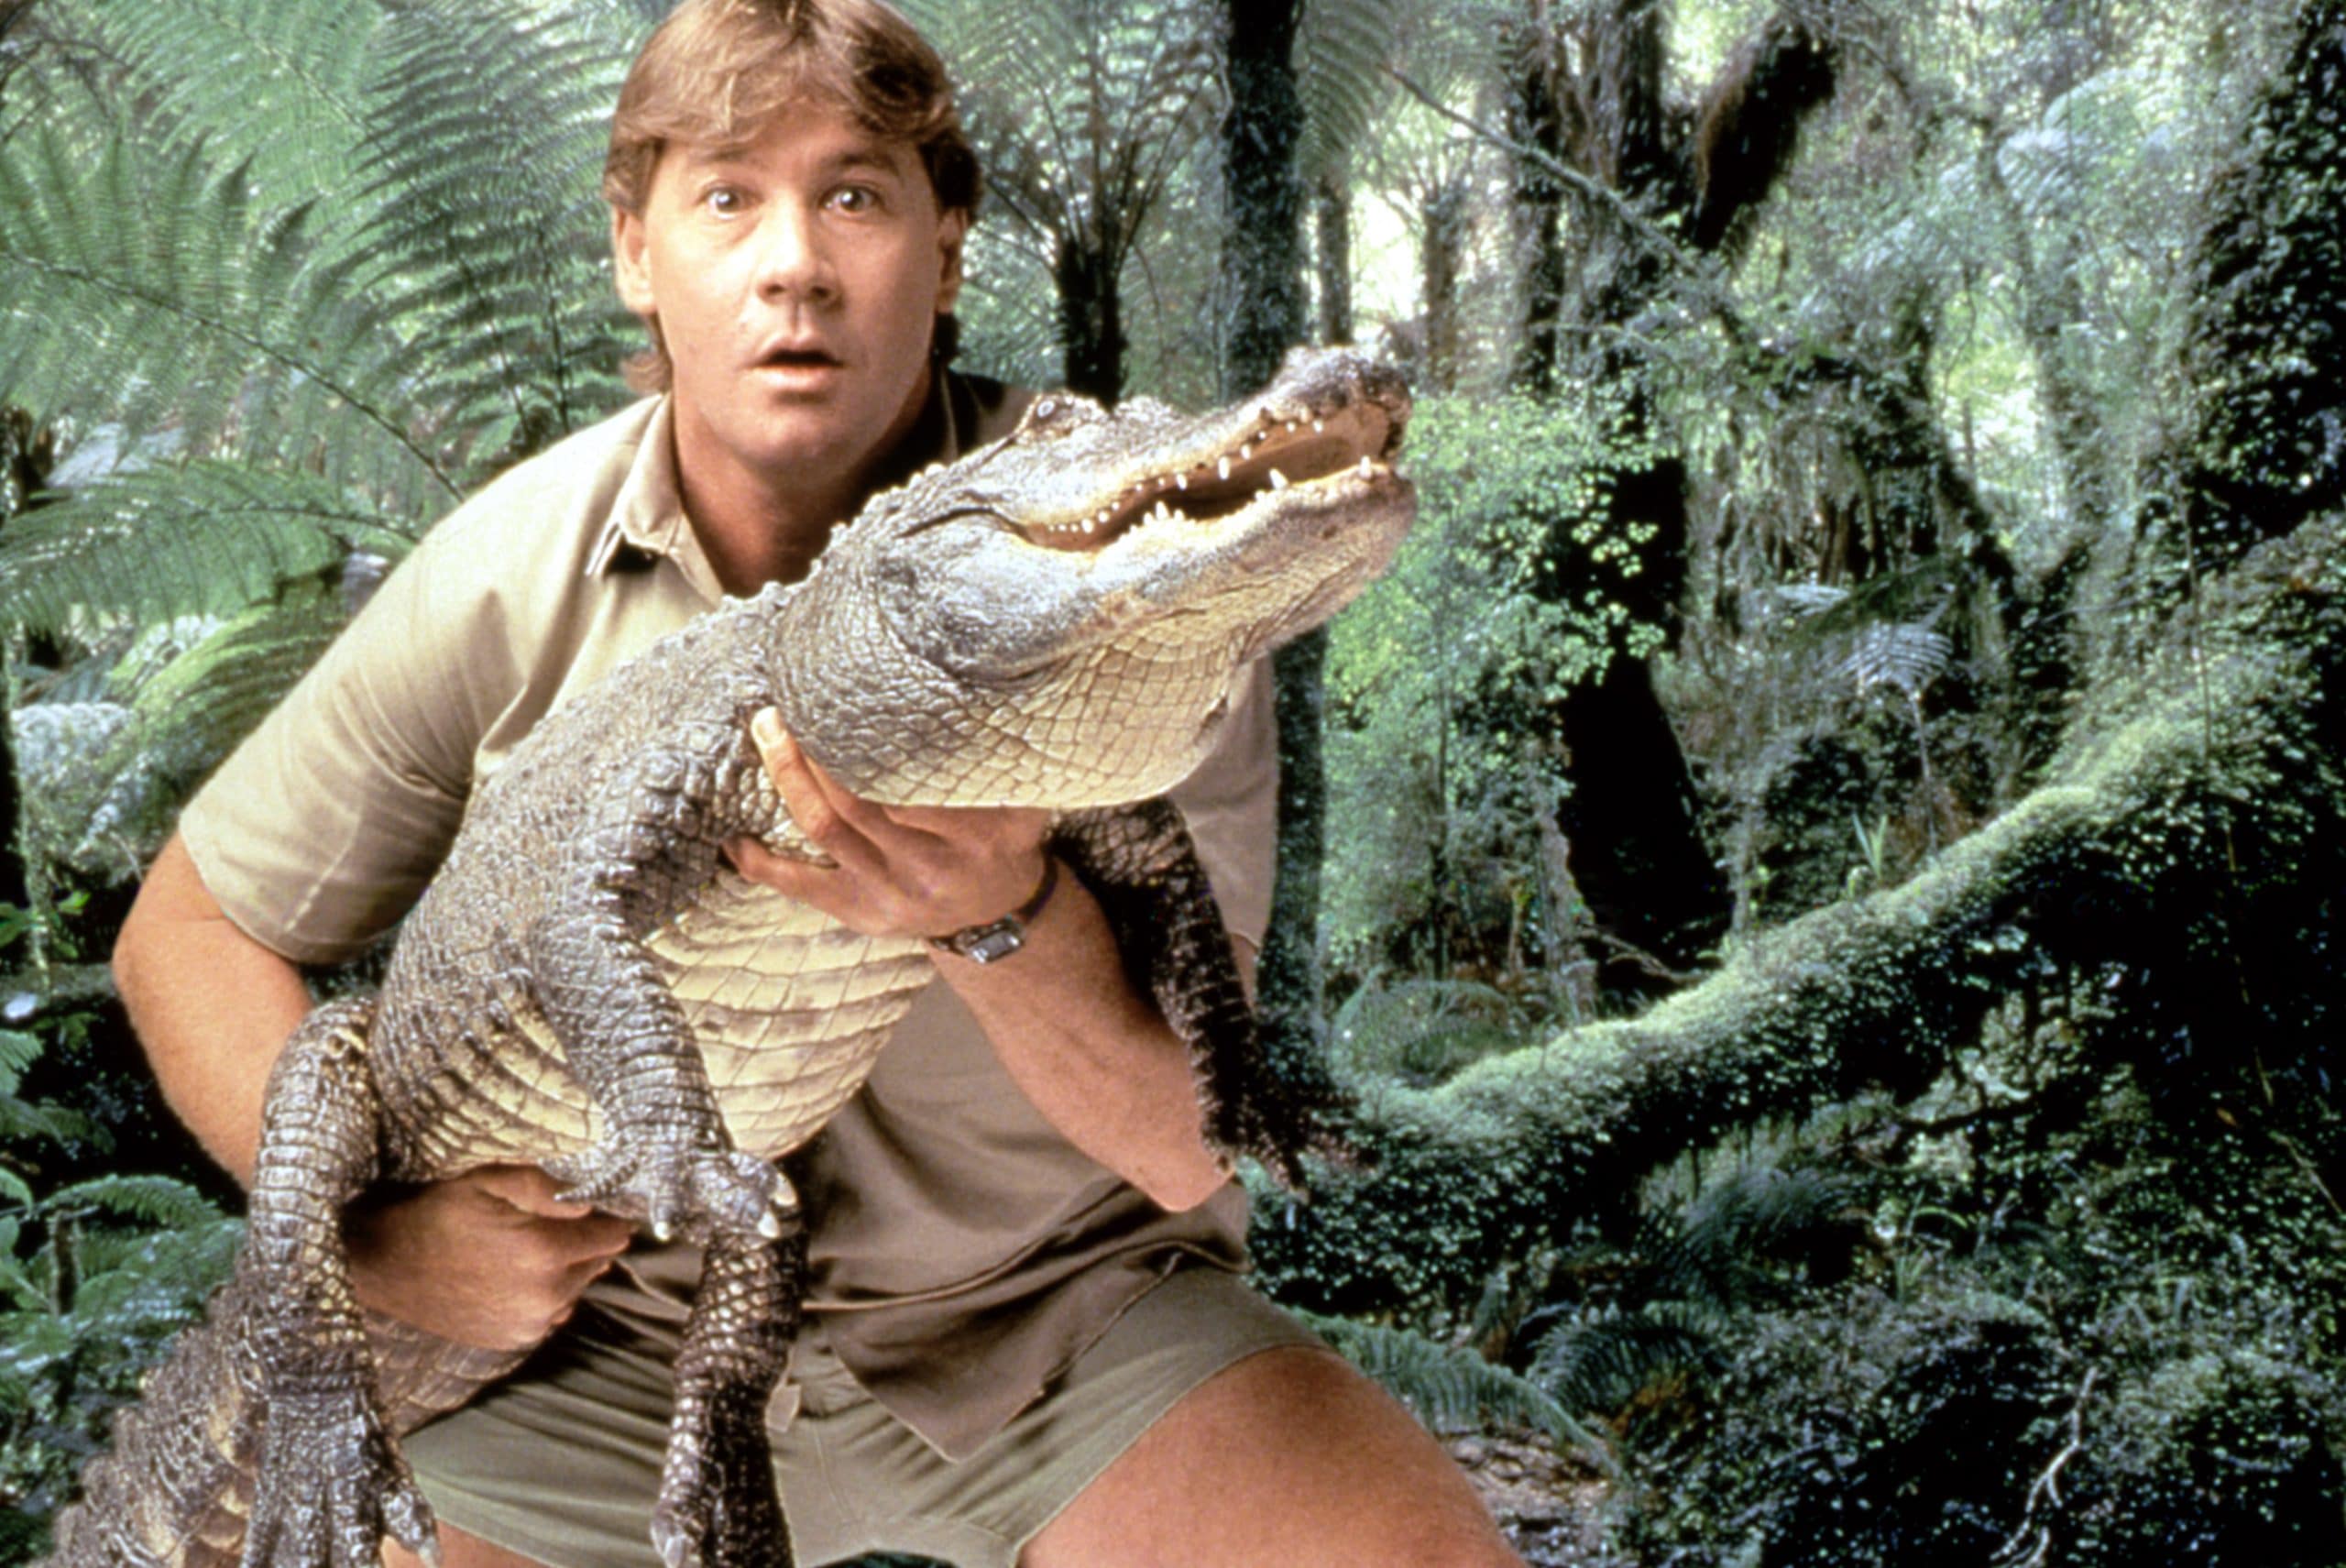 CROCODILE HUNTER, Steve Irwin with a crocodile, 1996-2006